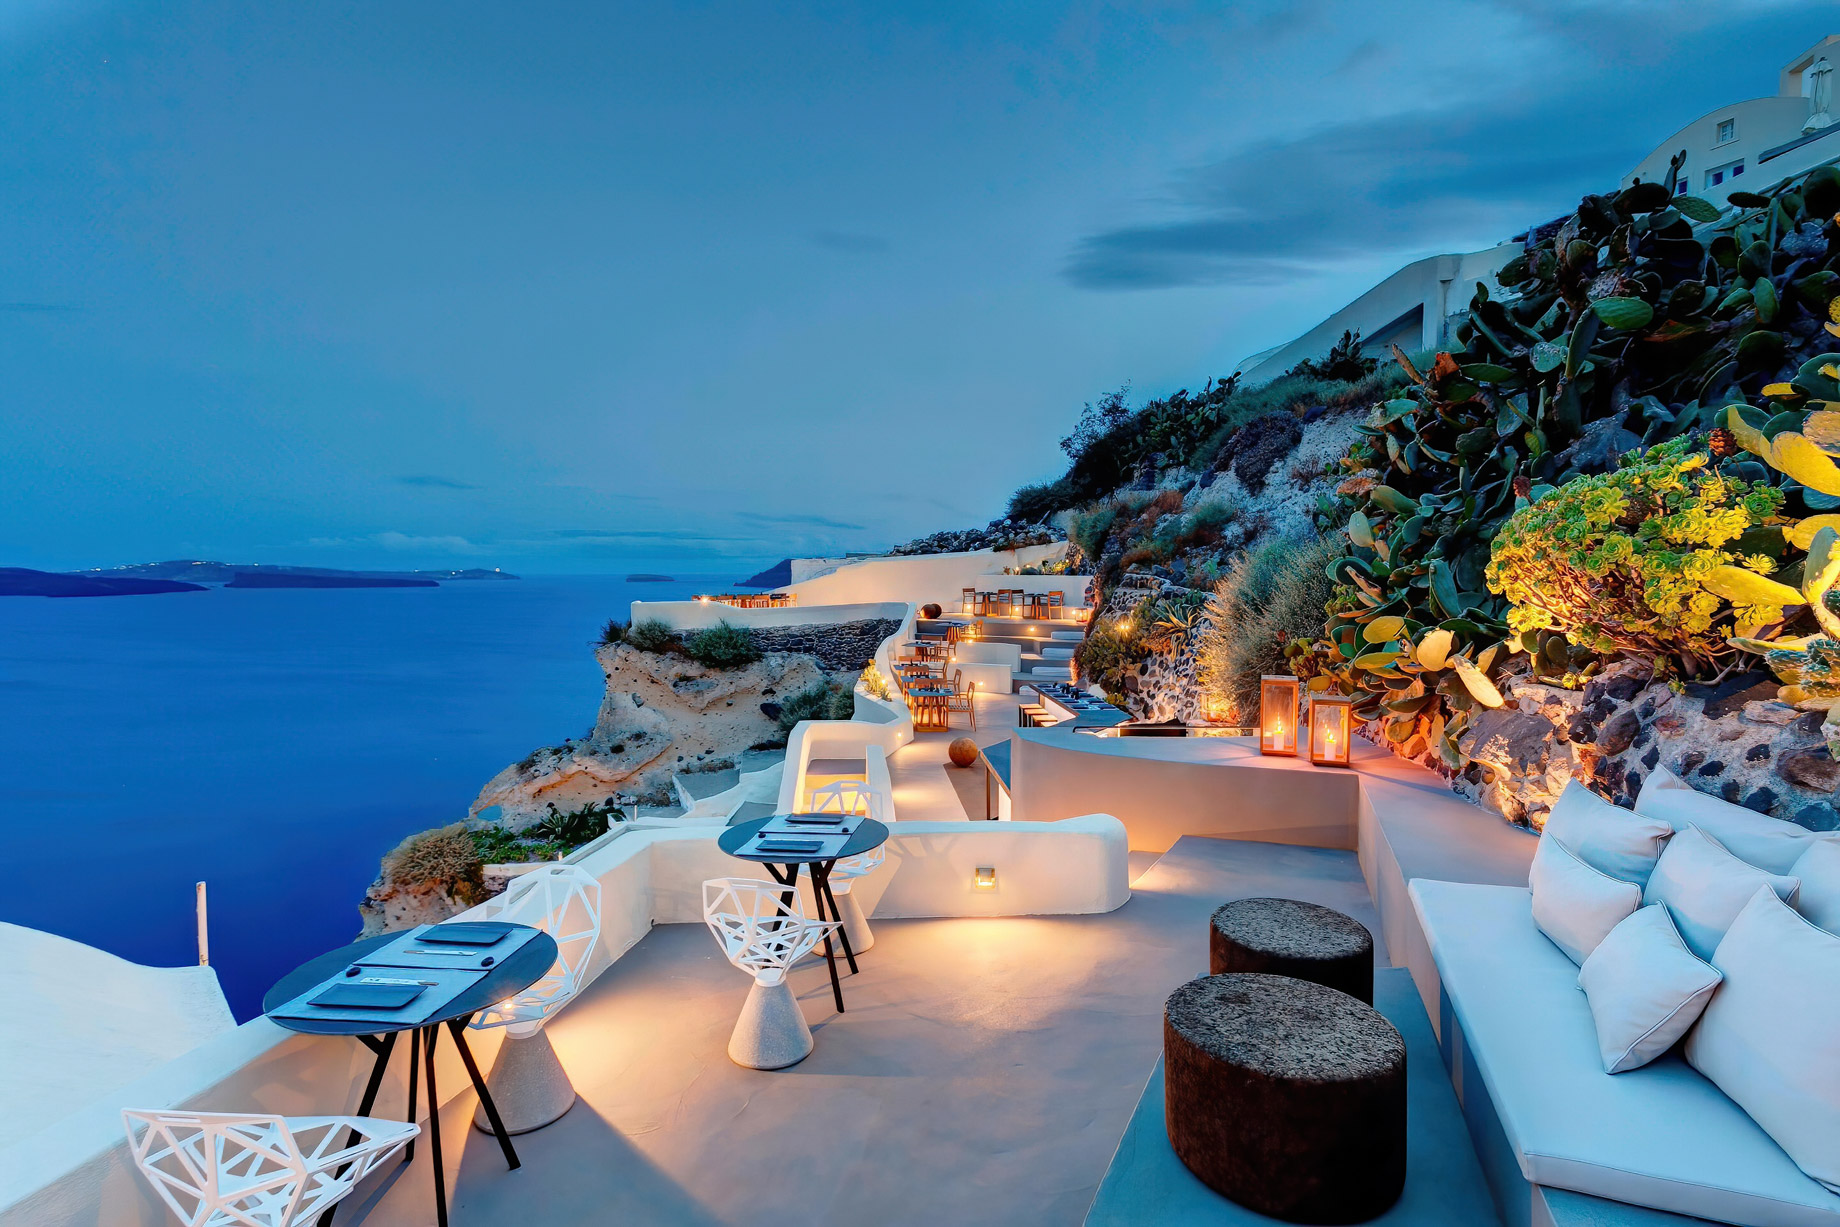 Mystique Hotel Santorini – Oia, Santorini Island, Greece – Cliffside ASEA Restaurant and Lounge Ocean View